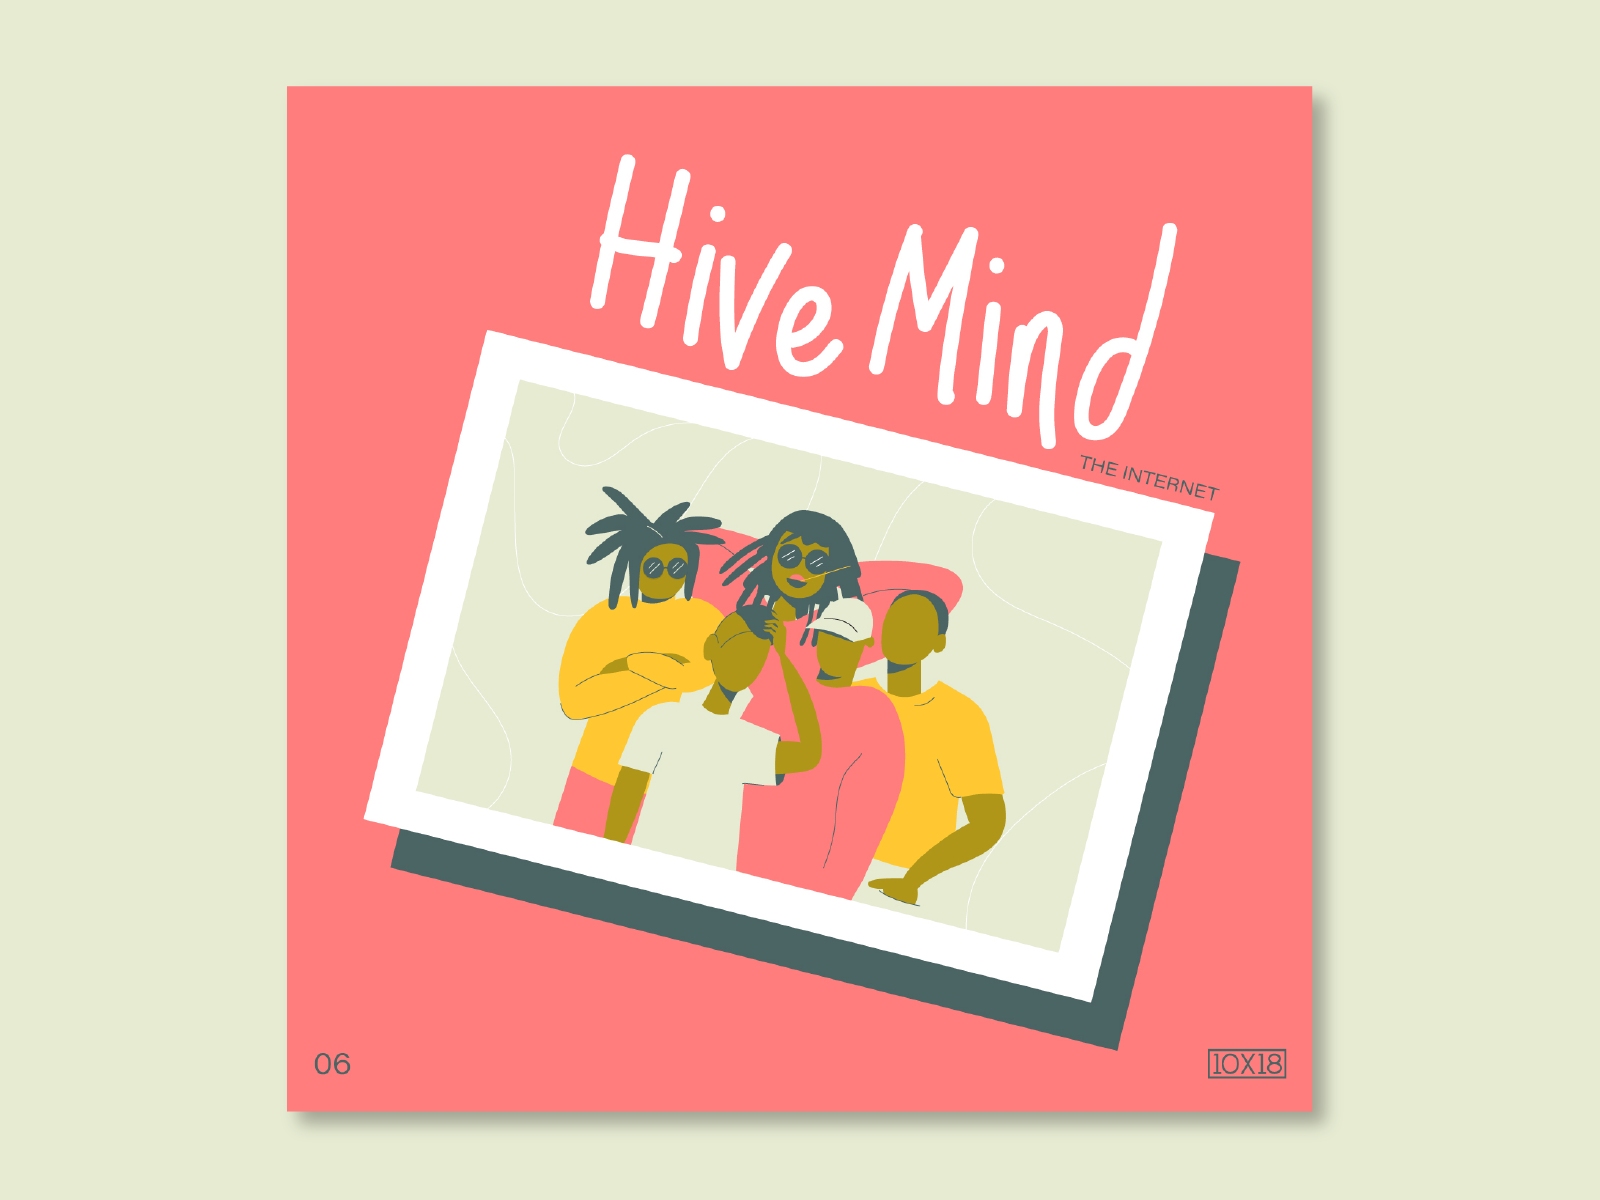 10X18 - 6. The Internet, Hive Mind 10x18 album art album cover band character group illustration music nostalgic the internet